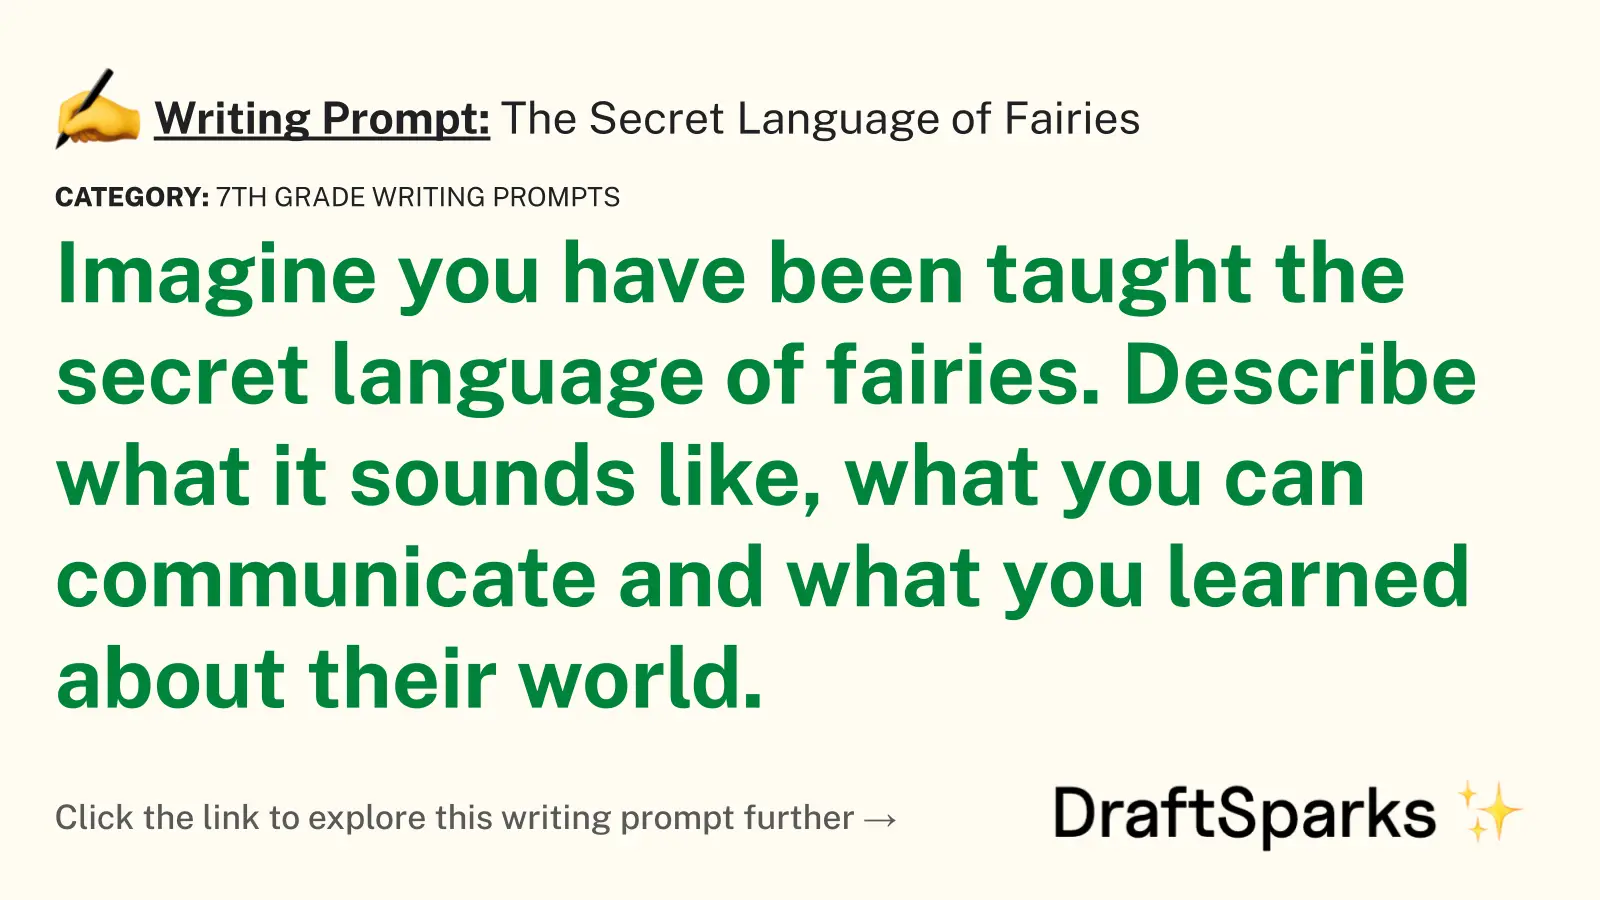 The Secret Language of Fairies